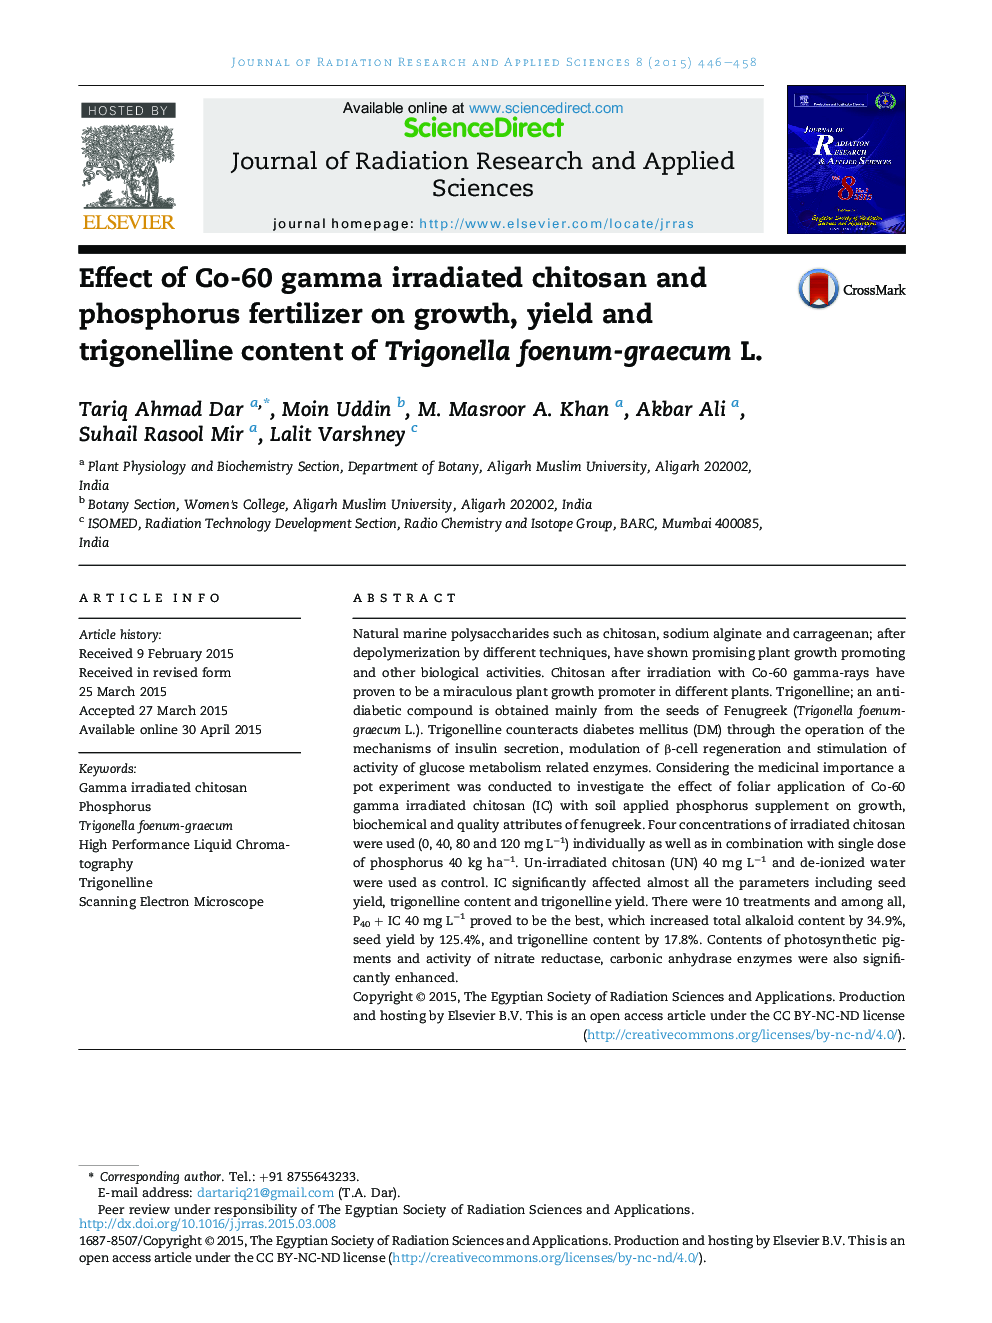 Effect of Co-60 gamma irradiated chitosan and phosphorus fertilizer on growth, yield and trigonelline content of Trigonella foenum-graecum L. 